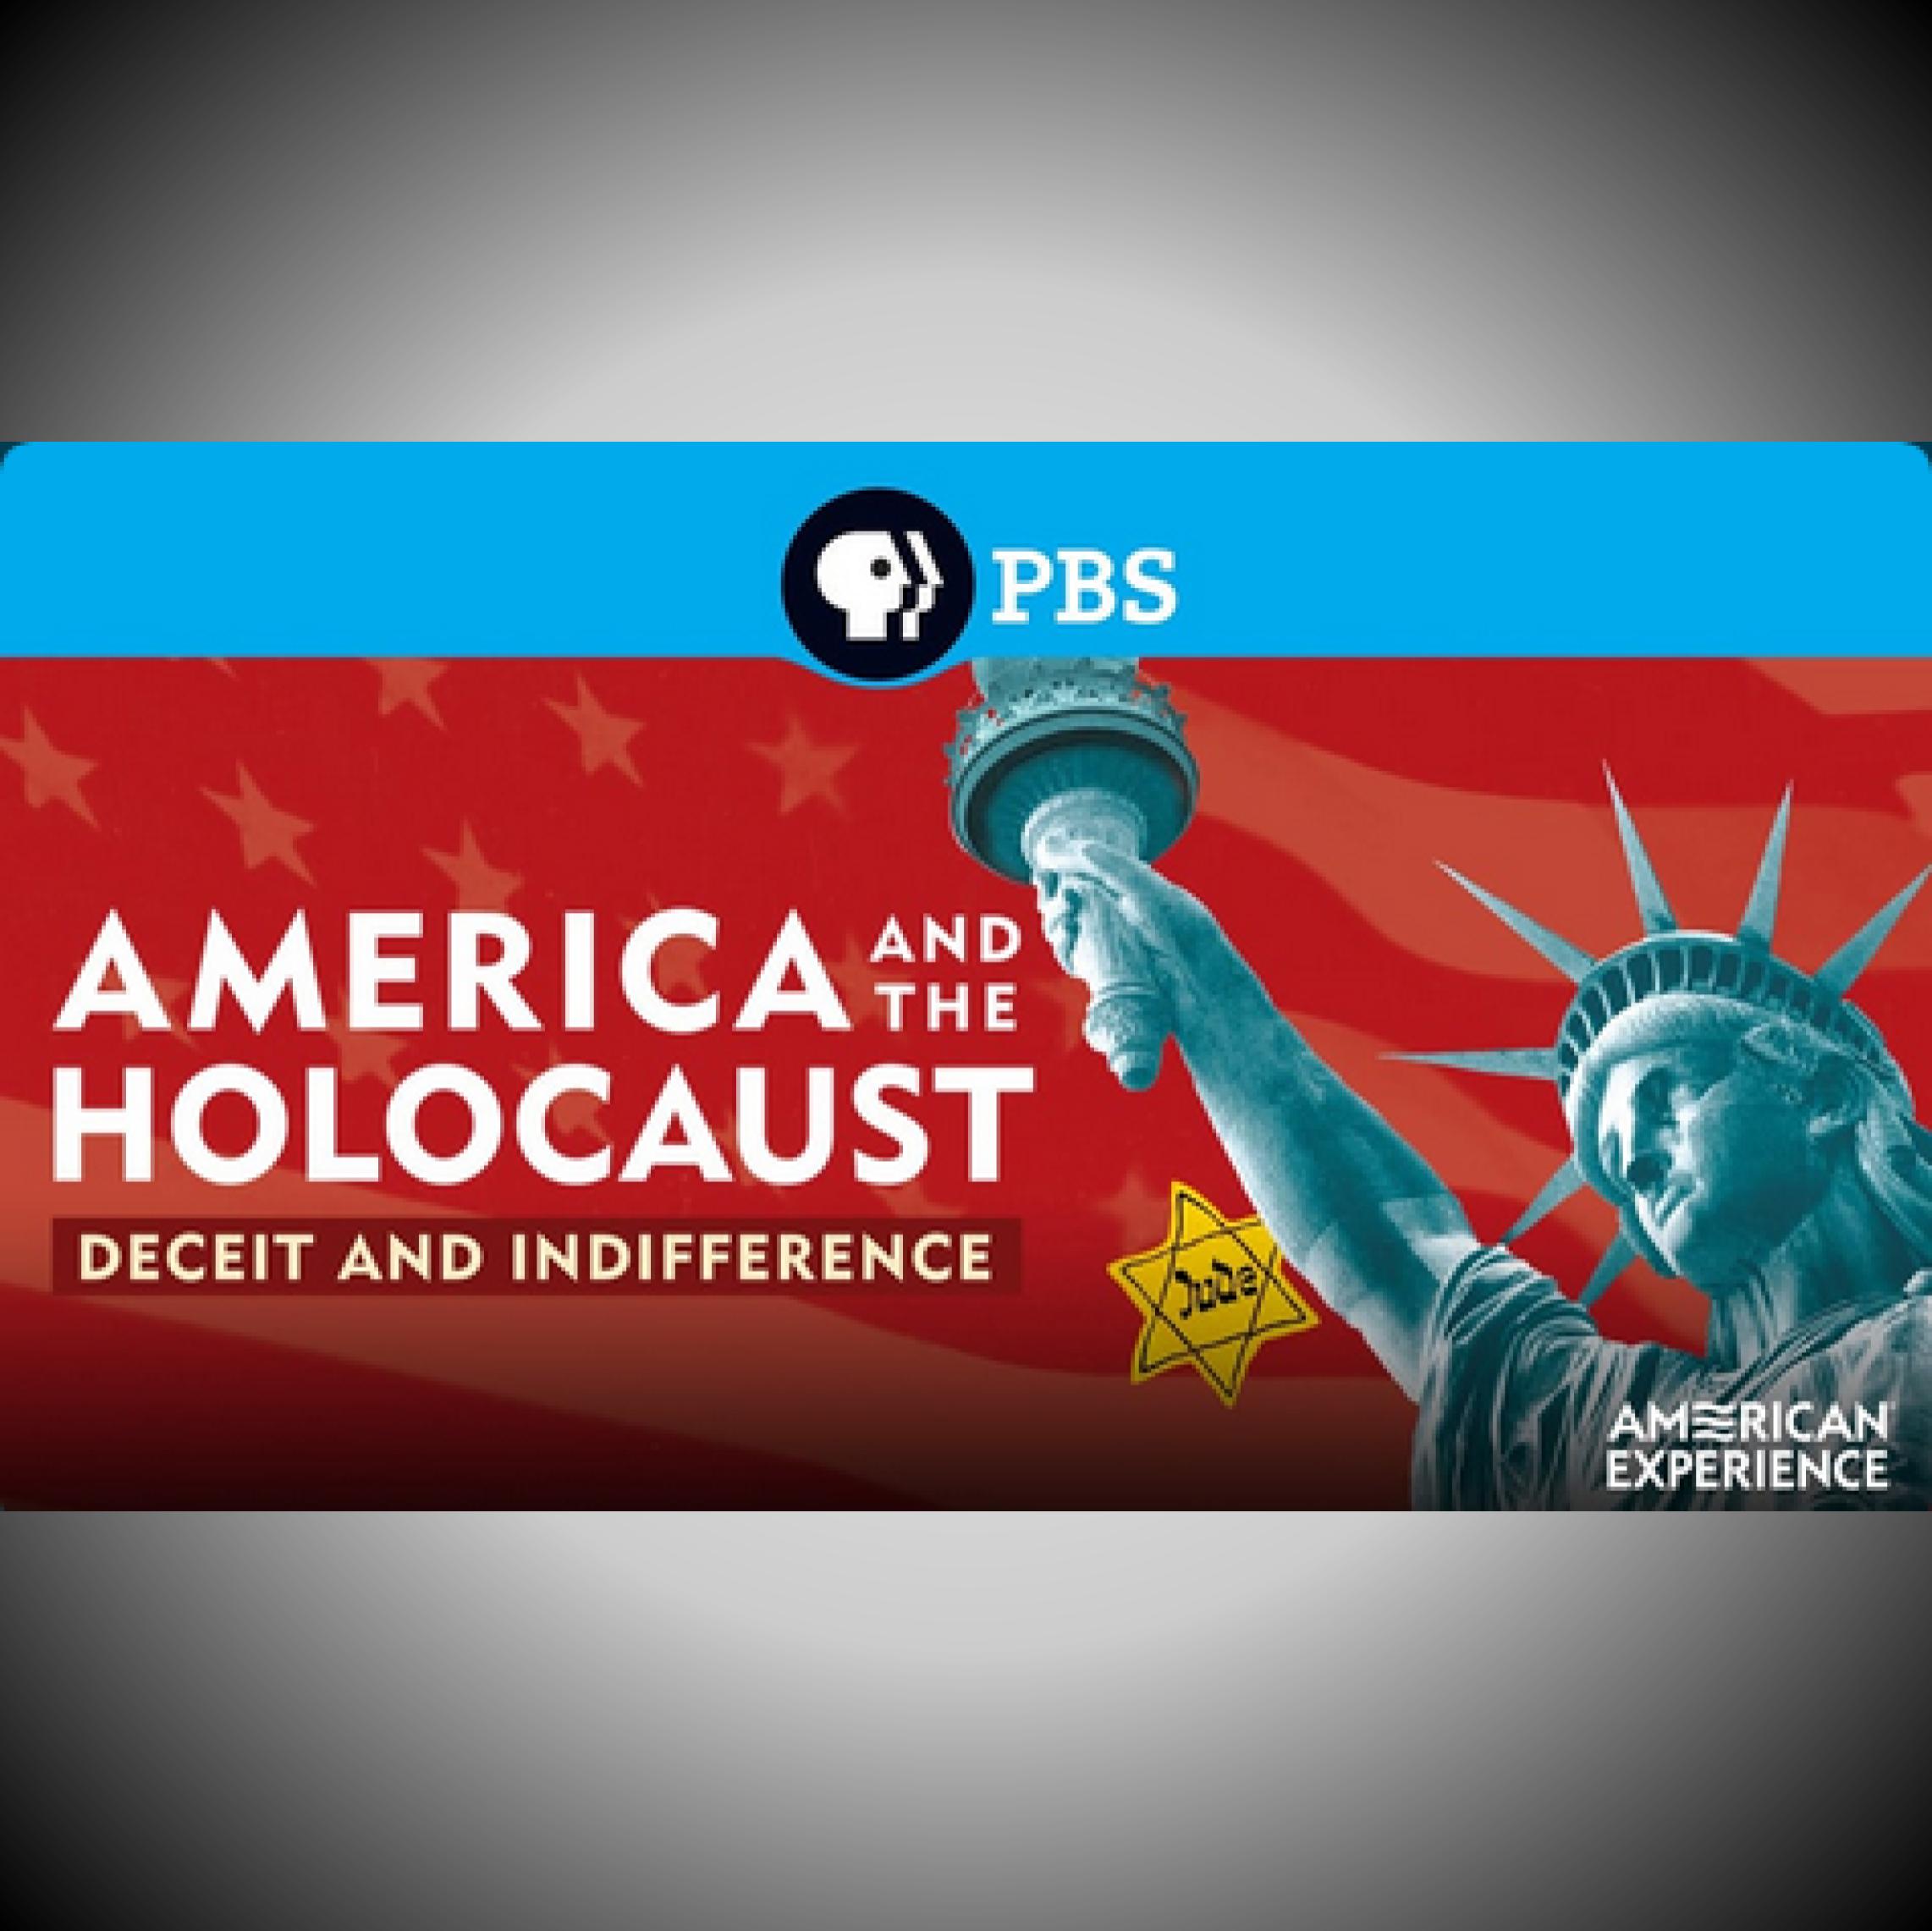 America and the Holocaust: Documentary Film